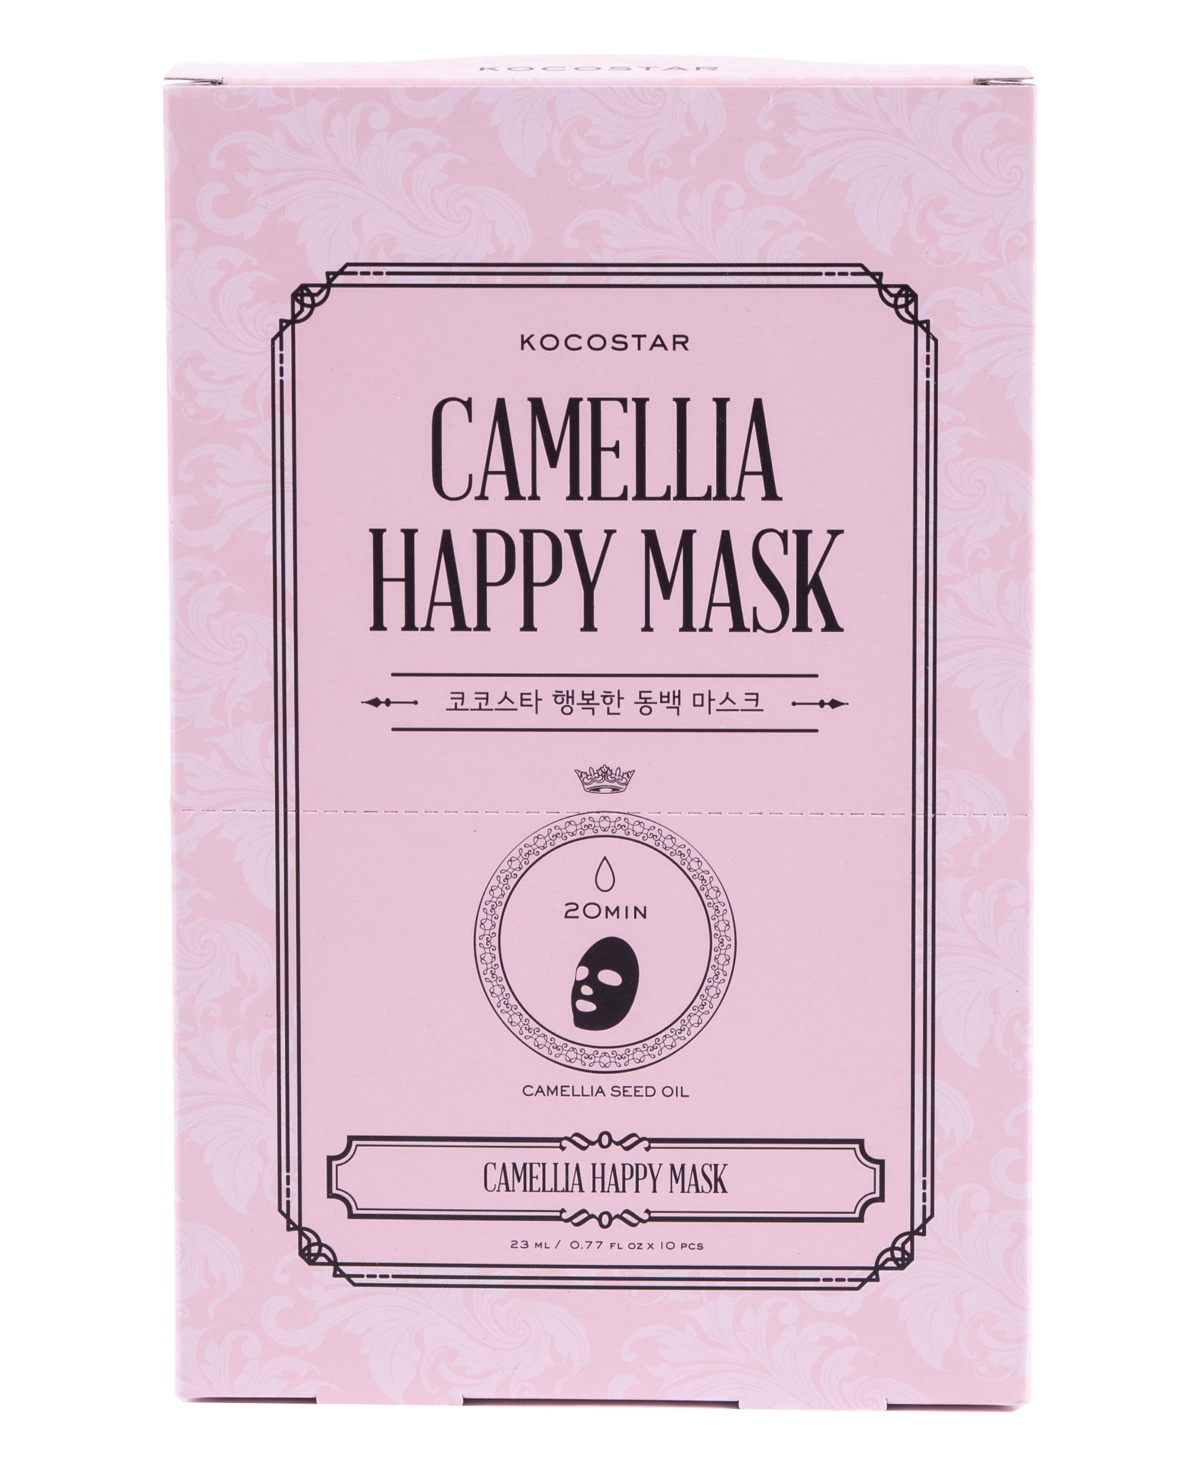 Camellia Happy Mask, 10-Pk. - Pink